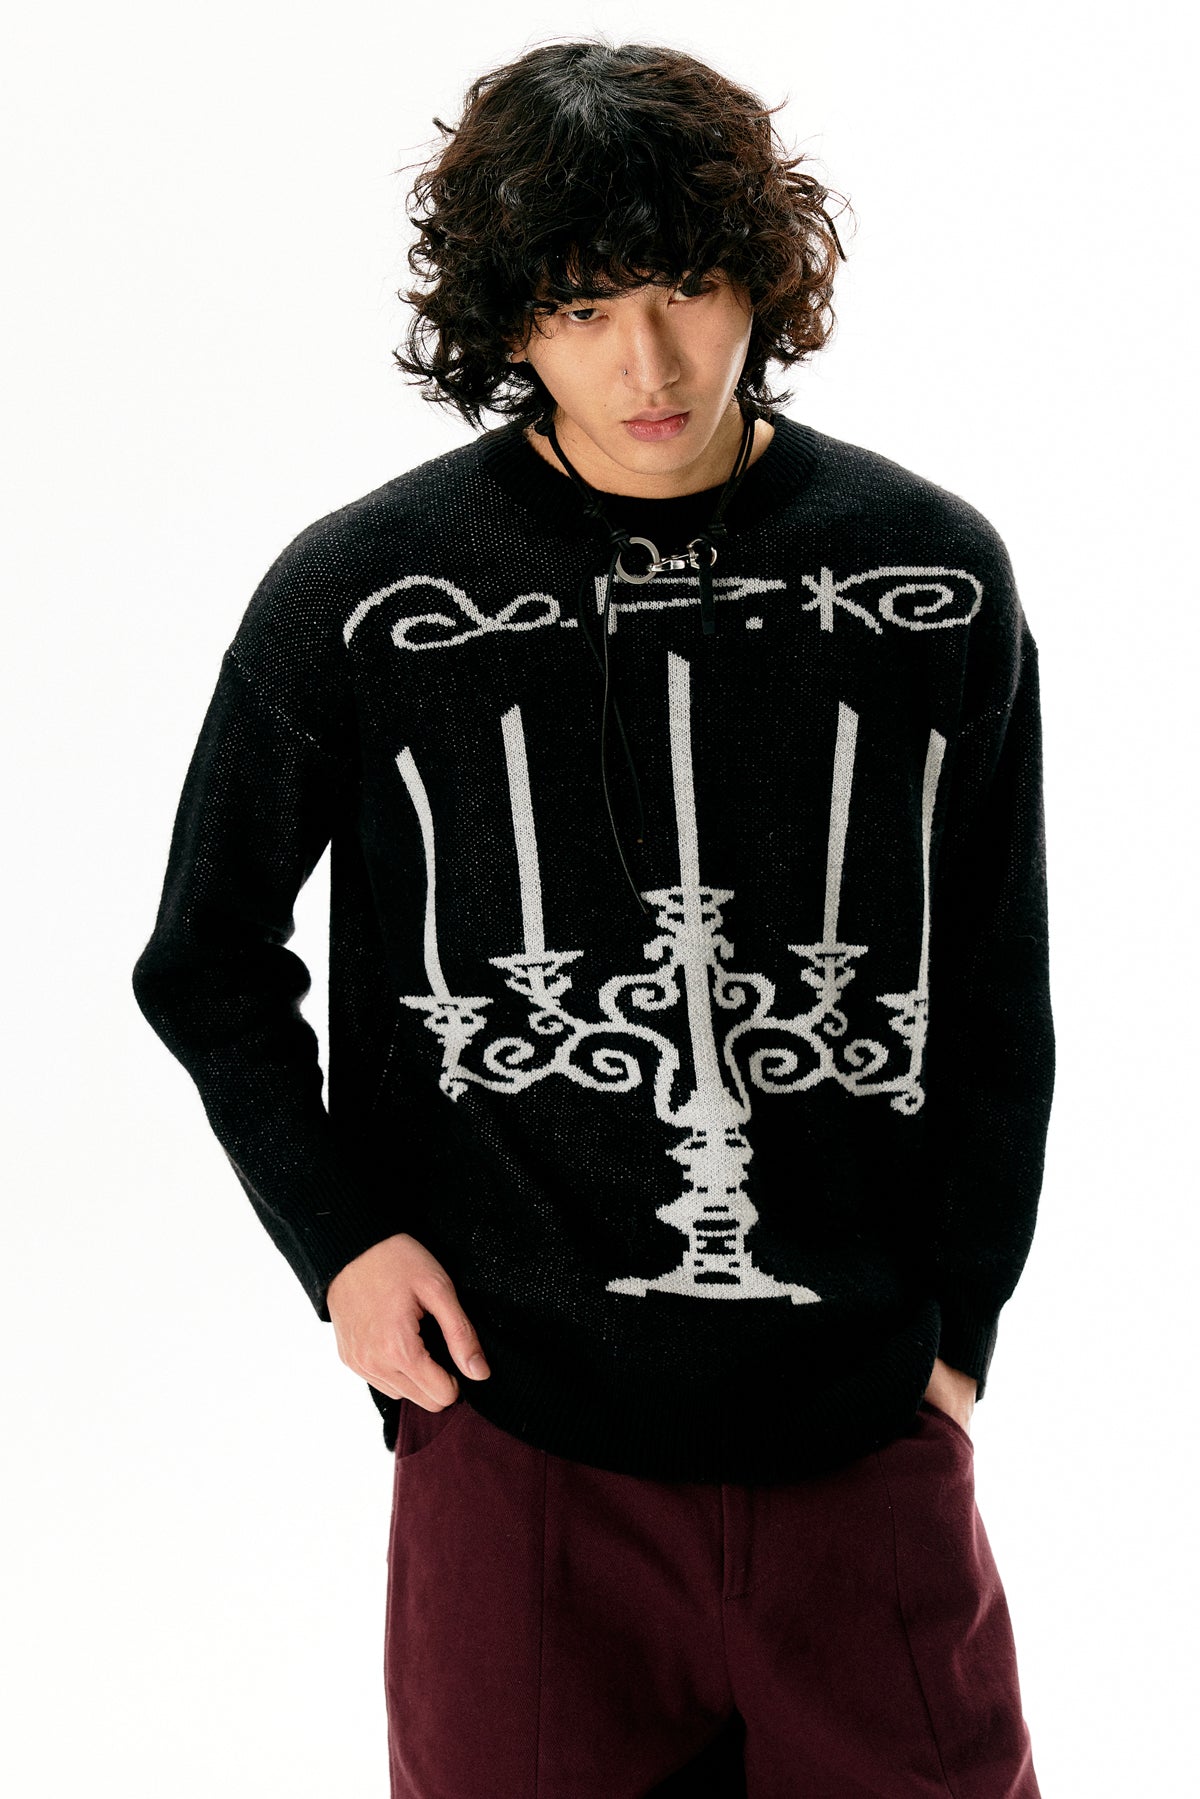 Candlestick Sweater